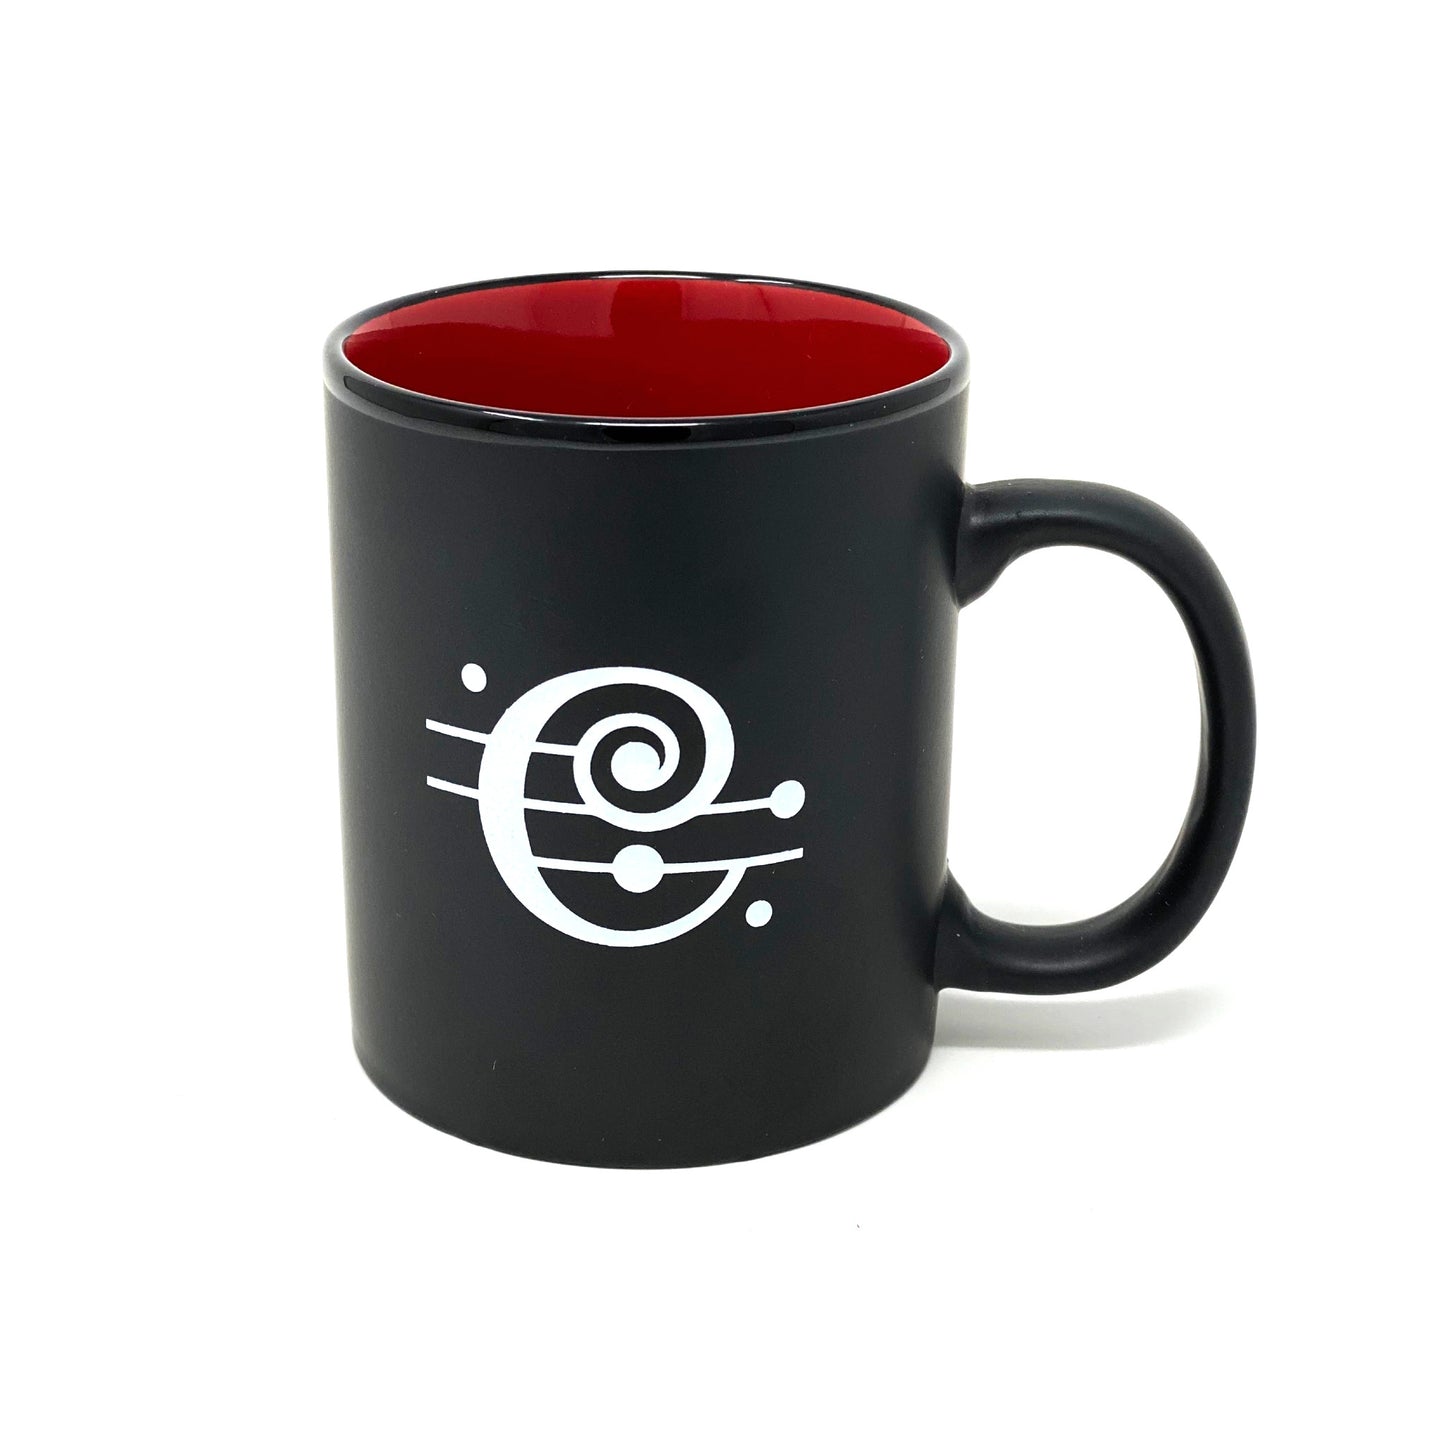 CSO Black Mug, Red Interior